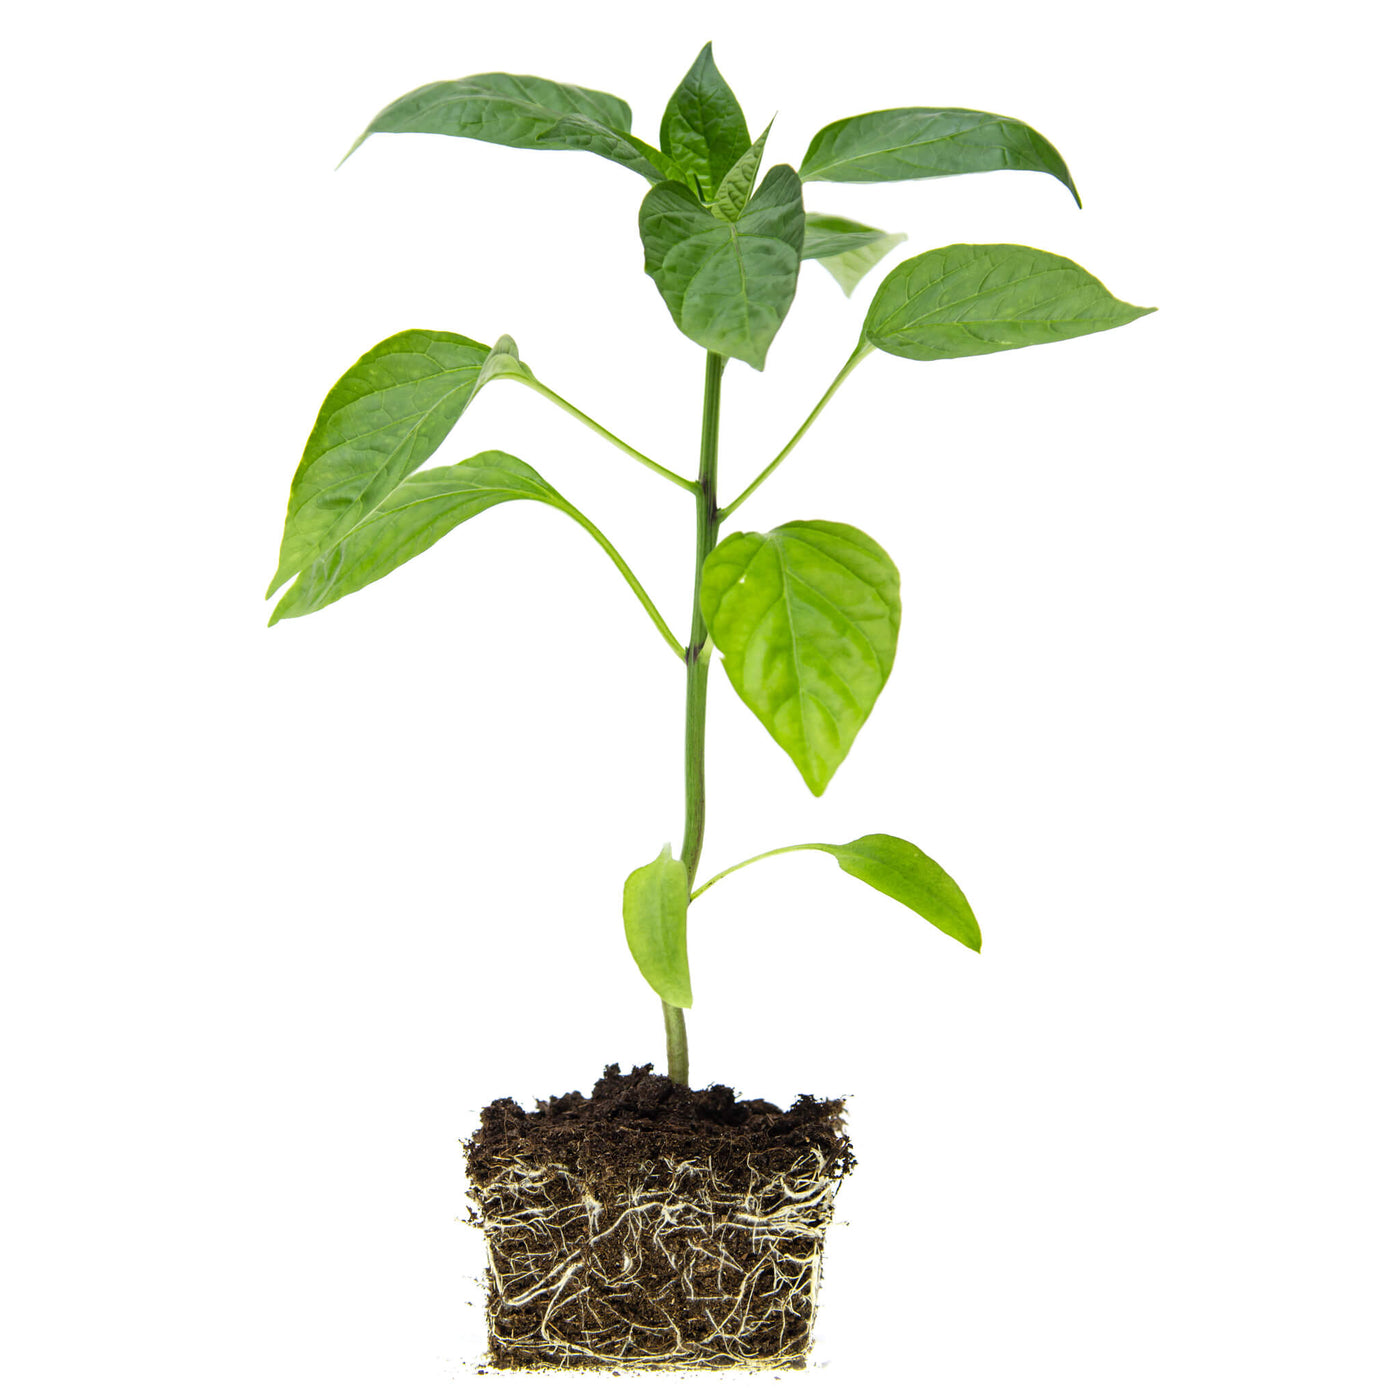 Grüner Paprika Gemüsejungpflanze, Aquaponik, Hochbeet oder Garten